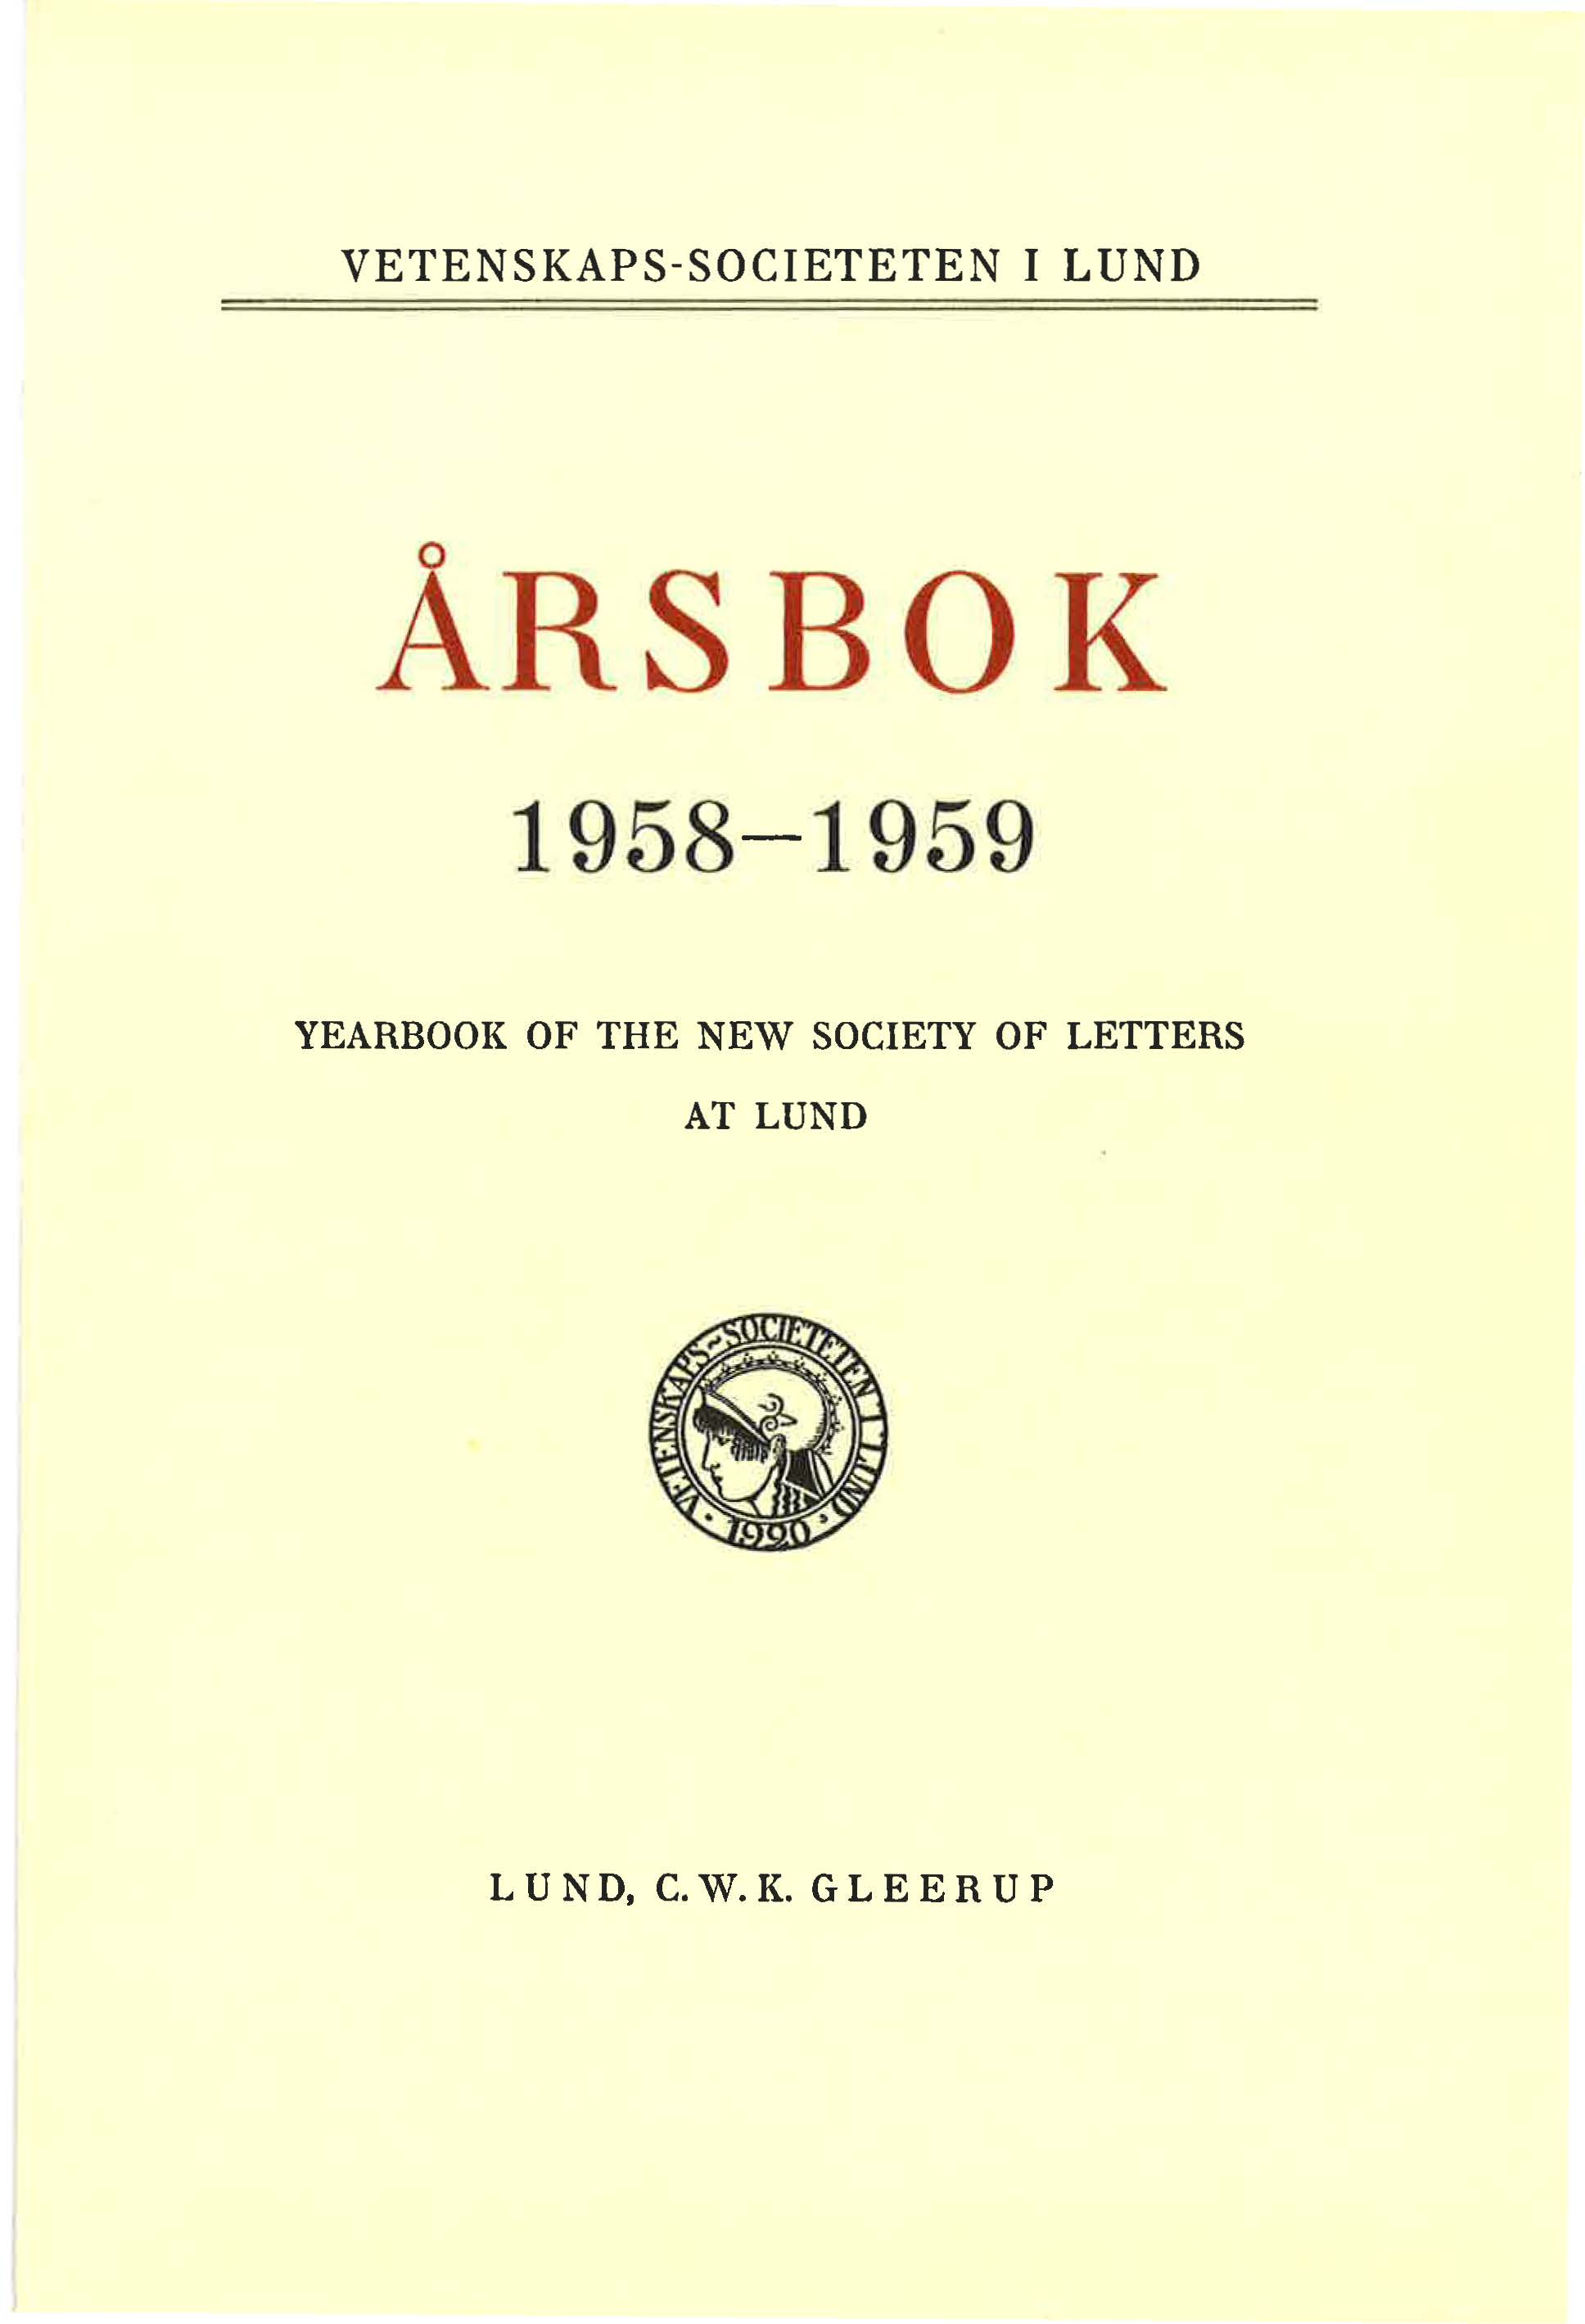 					Visa Årsbok 1958-1959
				